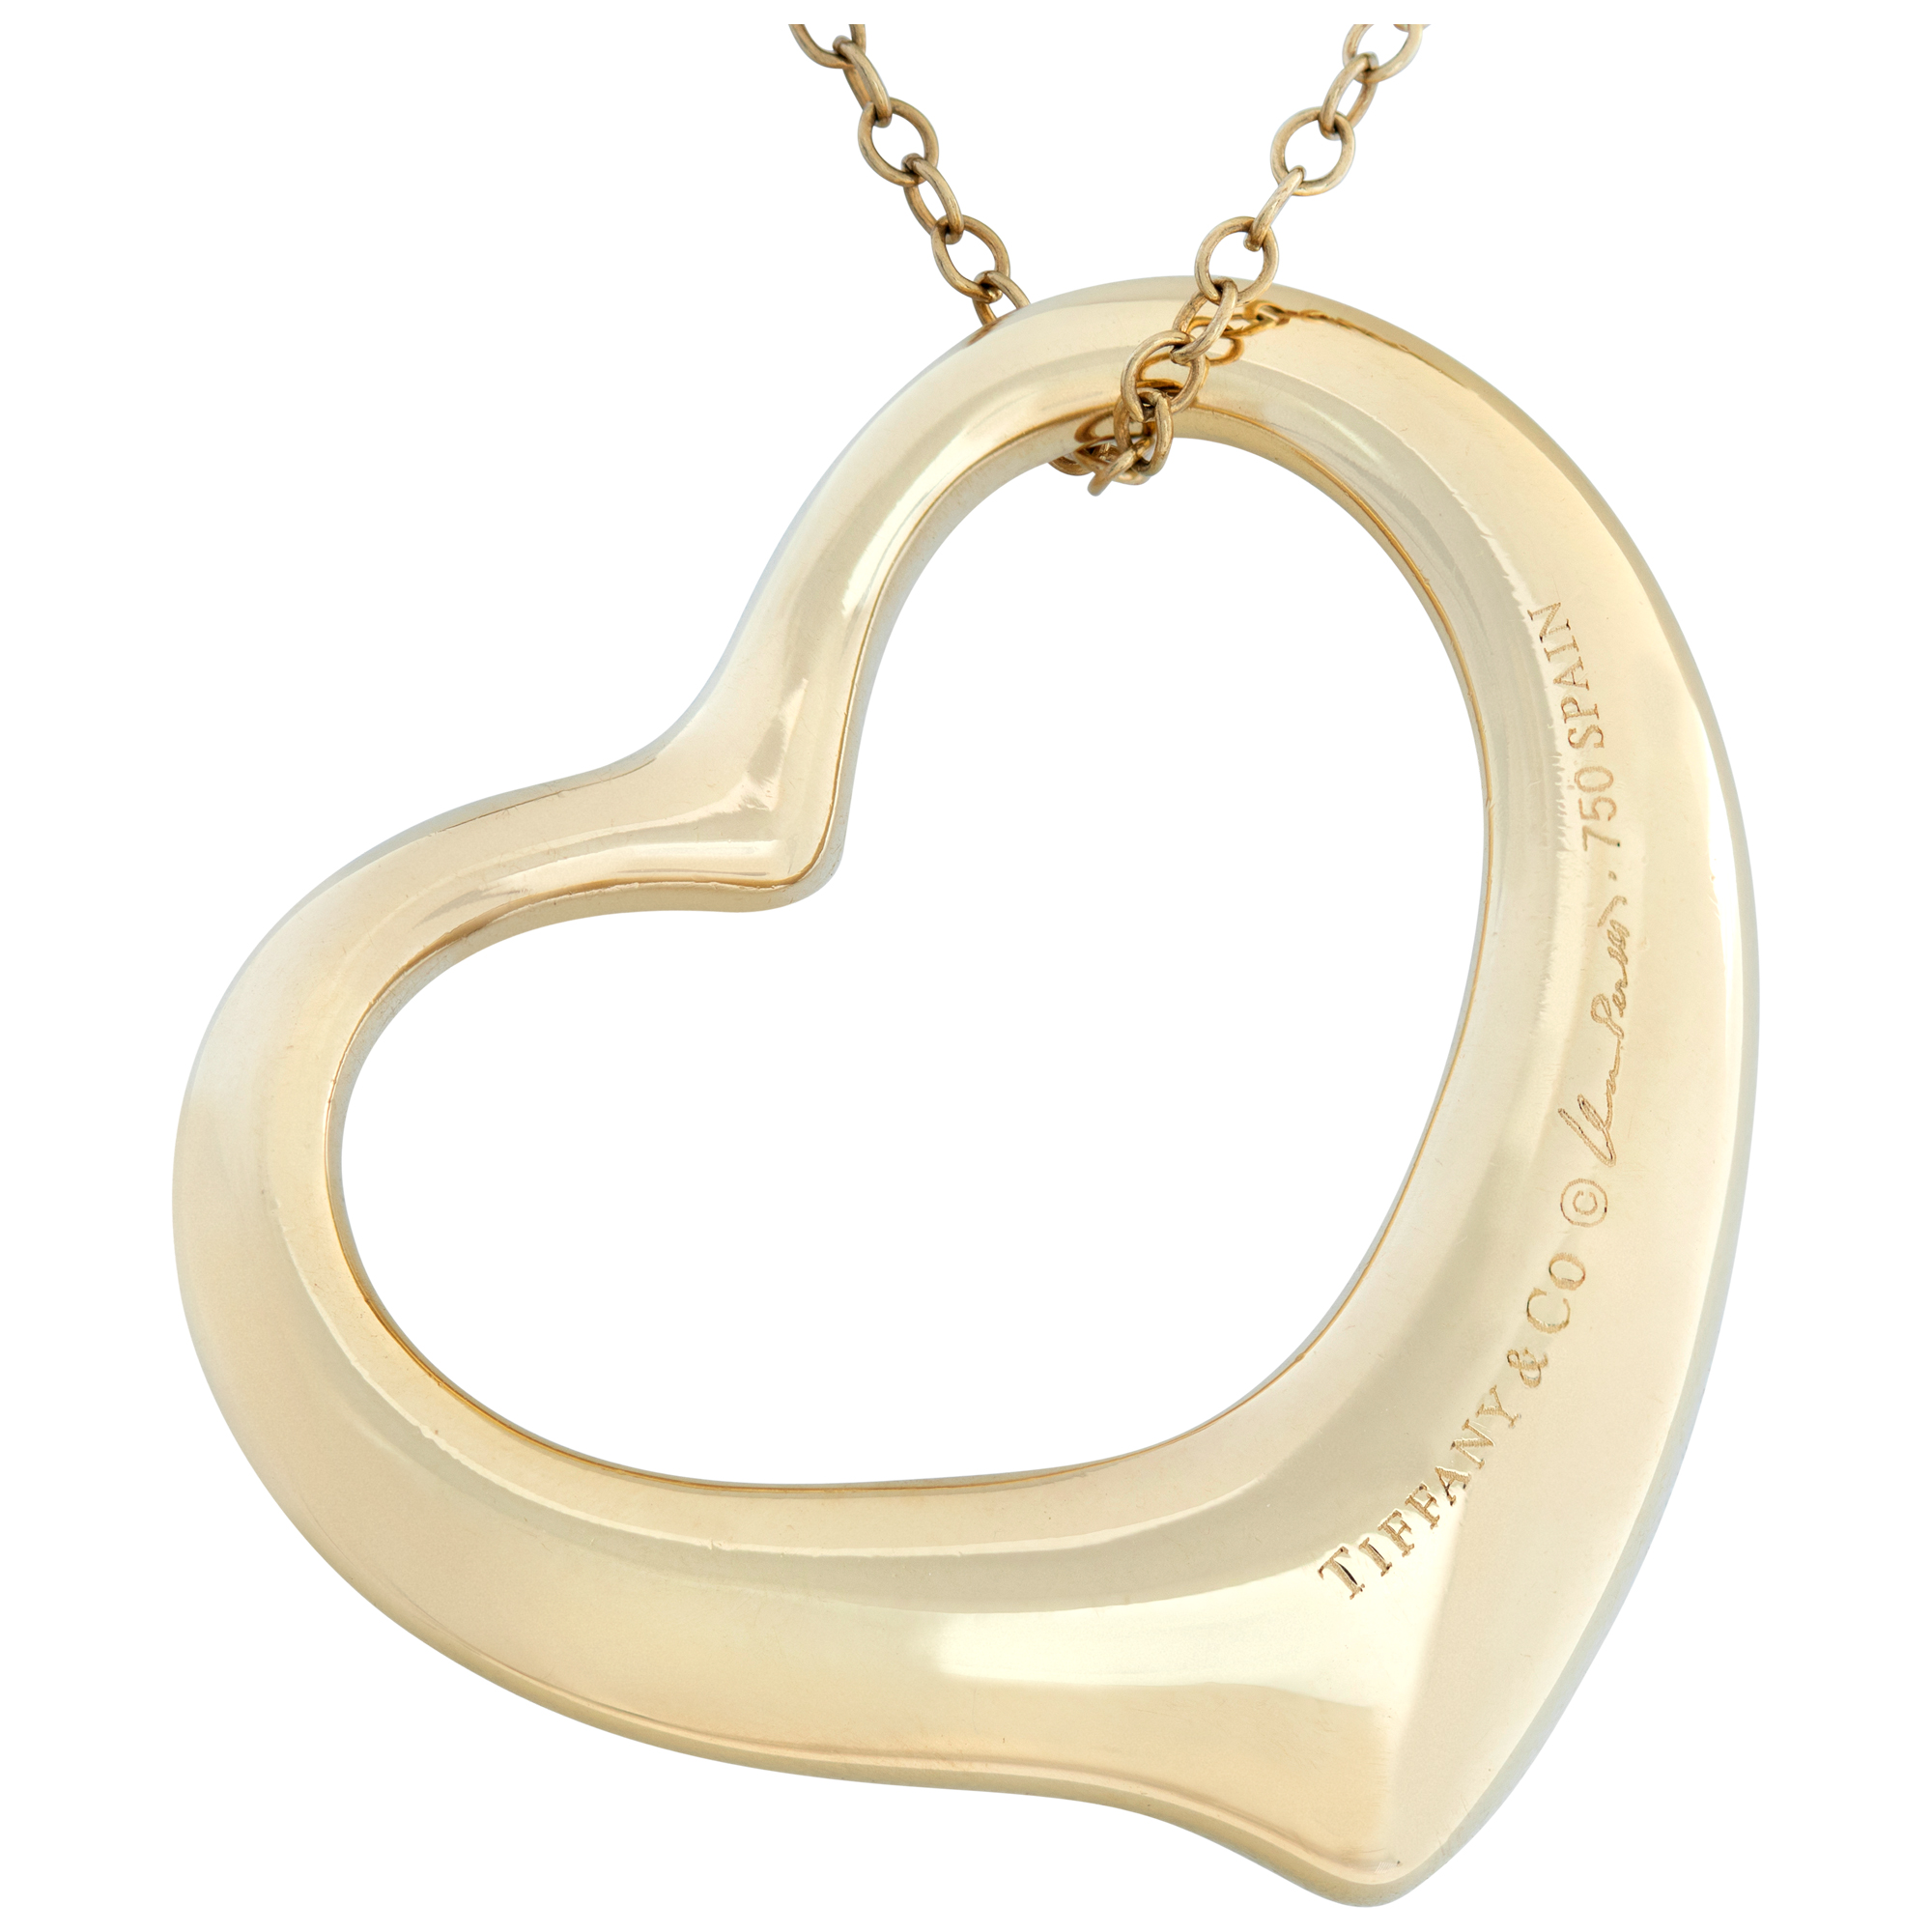 Tiffany & Co. Elsa Peretti open heart pendant in 18k